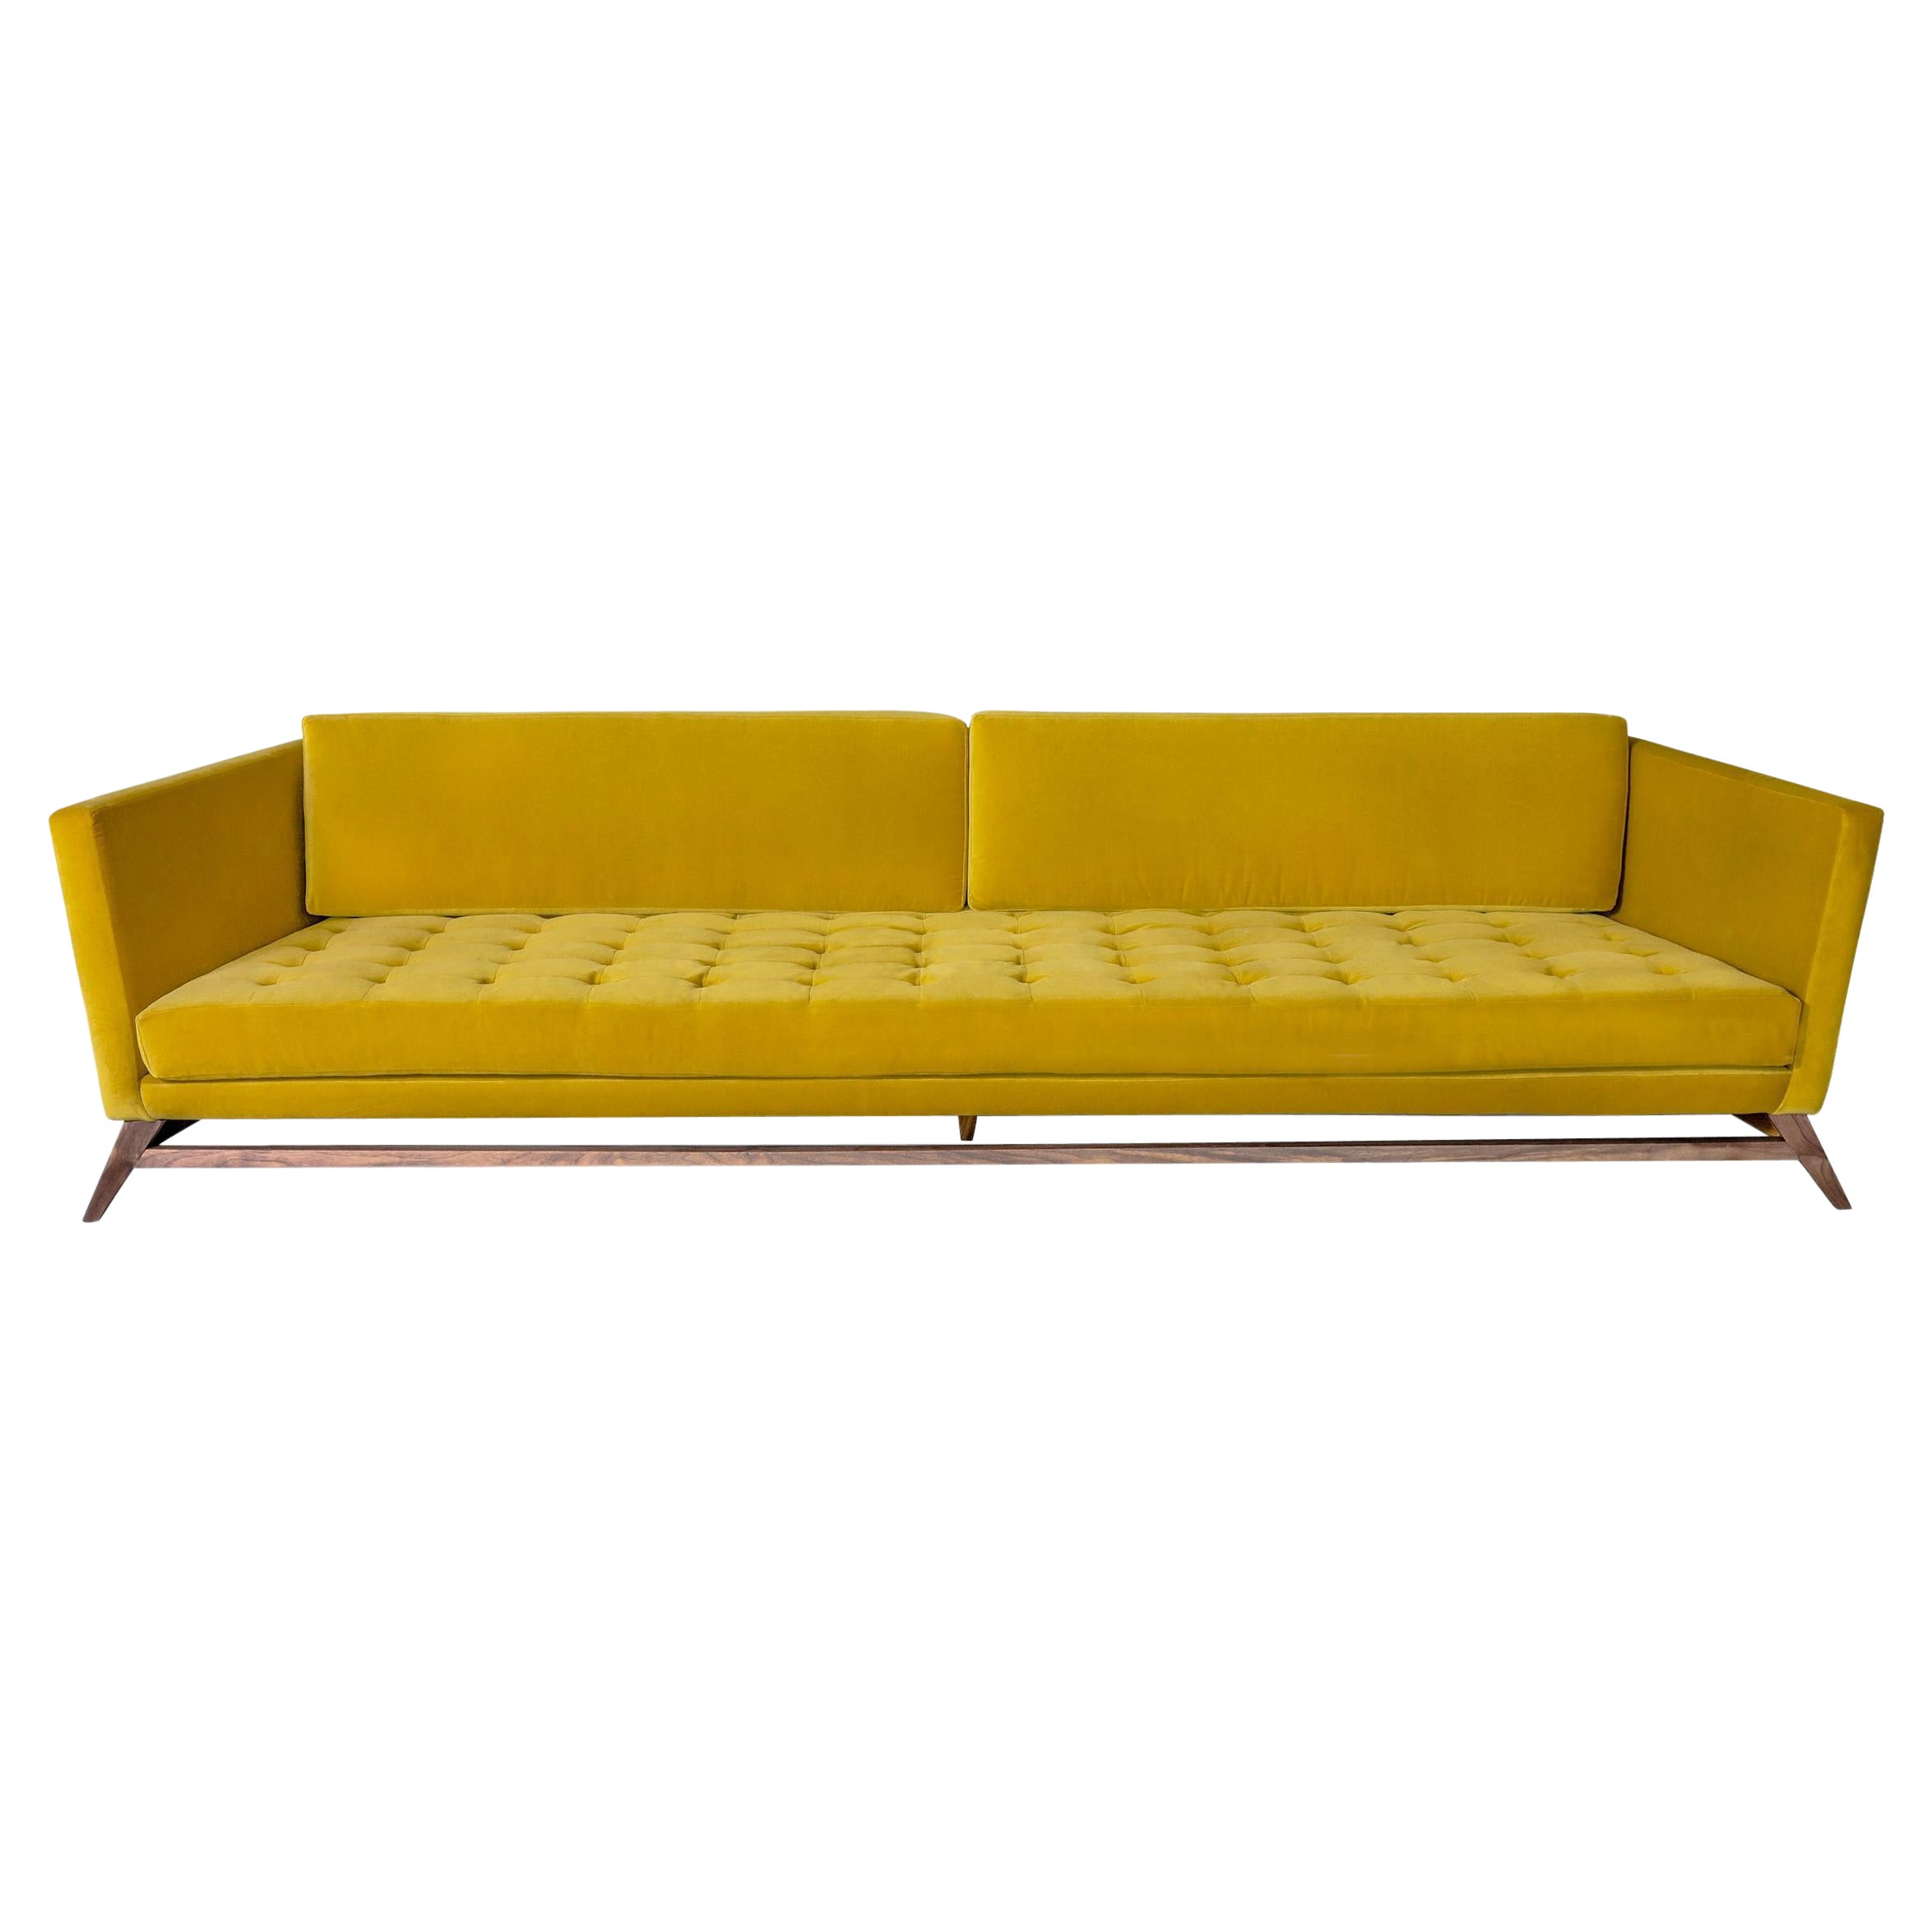 Yellow Eclipse Sofa by Atra Design